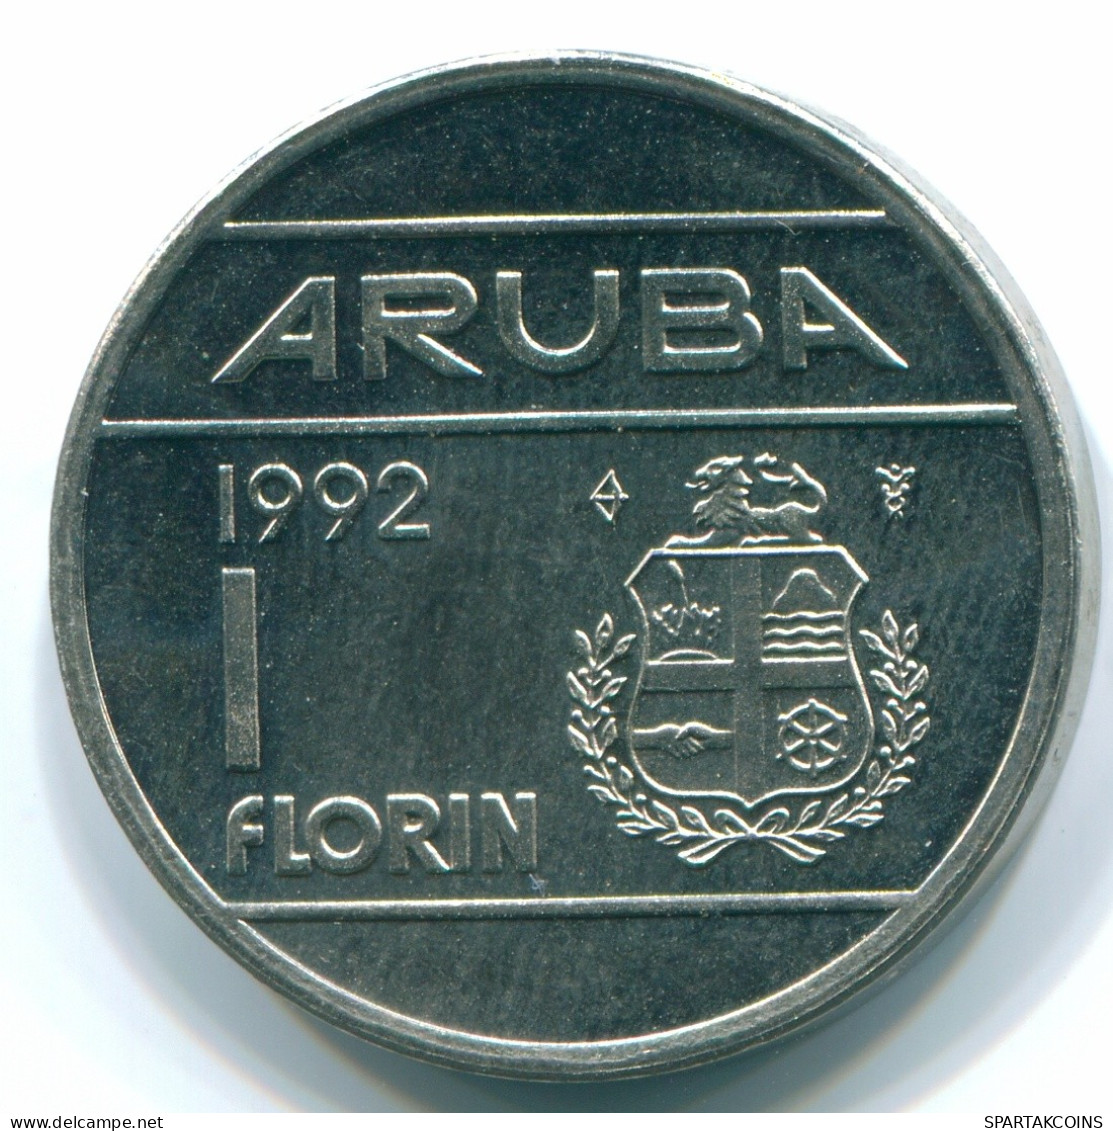 1 FLORIN 1992 ARUBA (Netherlands) Nickel Colonial Coin #S13655.U.A - Aruba